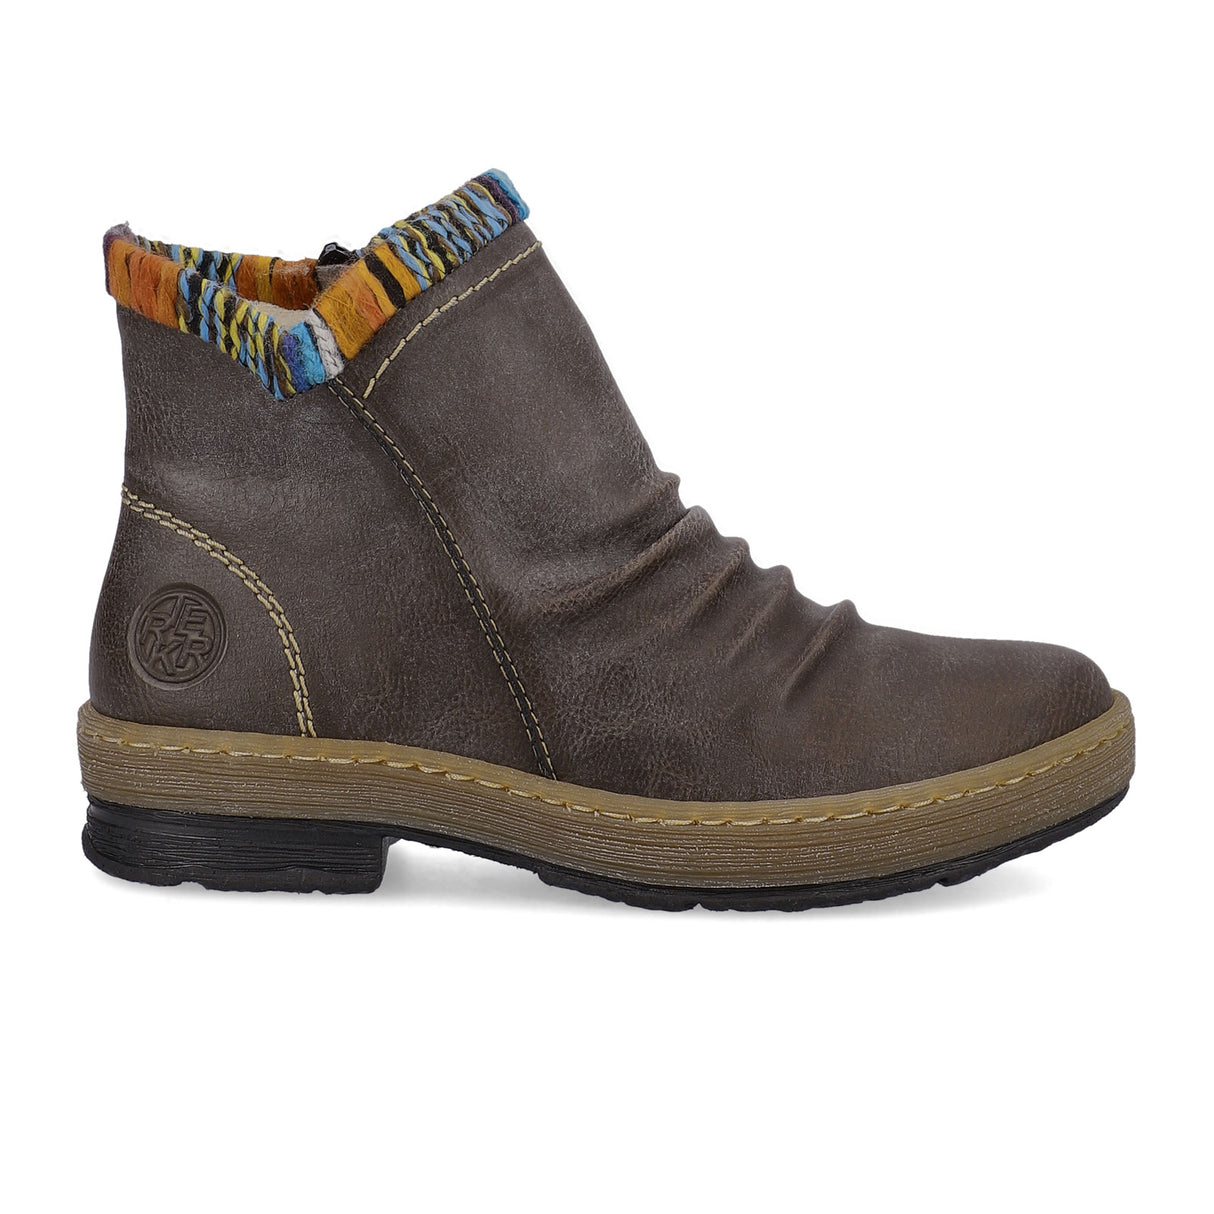 Rieker Felicitas Z6755-45 Ankle Boot (Women) - Basalt/Orange Boots - Fashion - Ankle Boot - The Heel Shoe Fitters